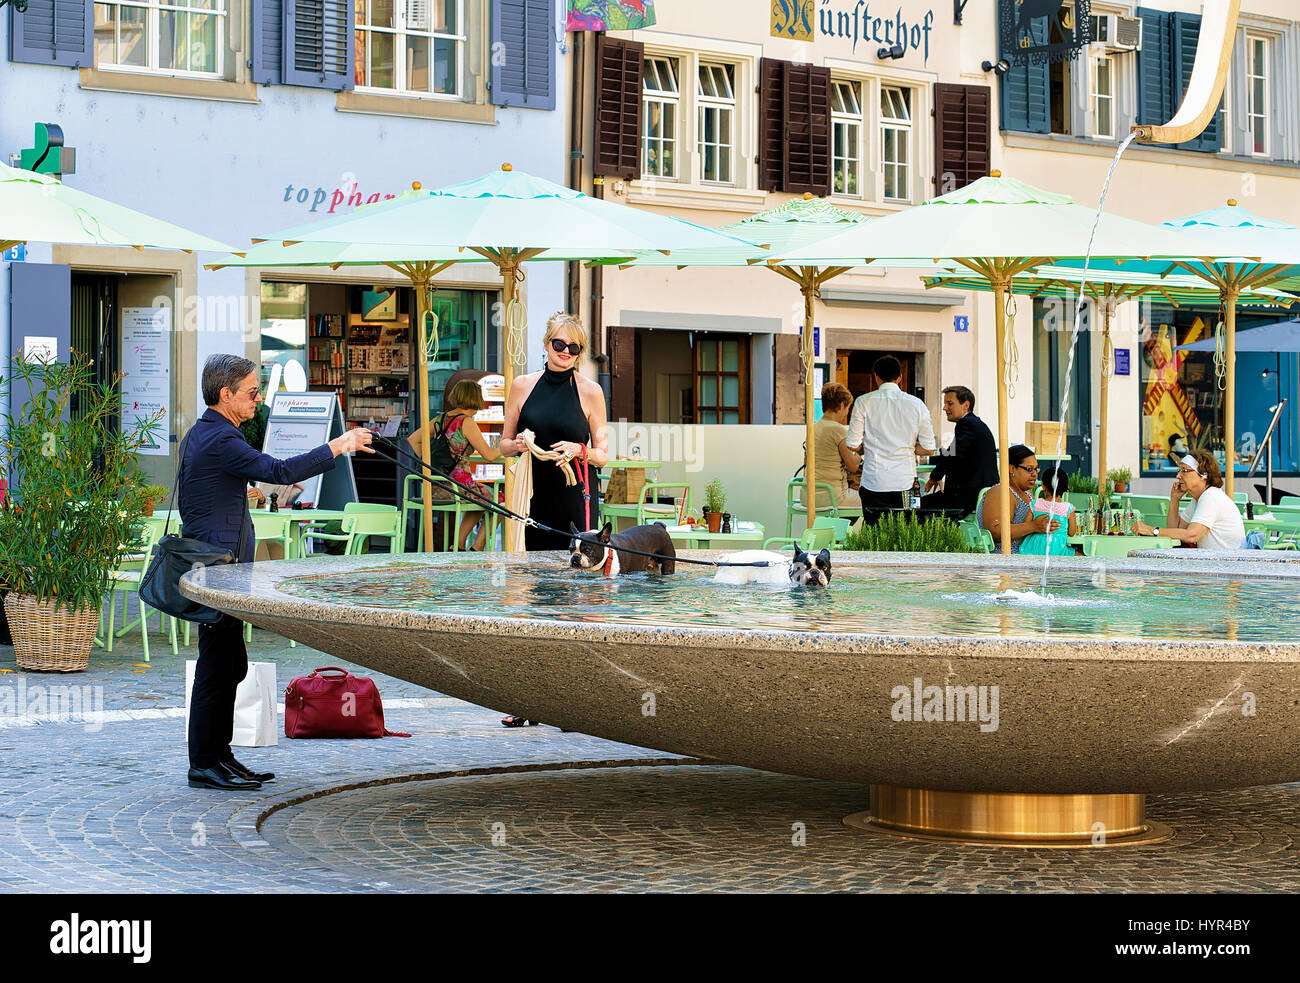 Zurich, Switzerland - September 2, 2016: People bathing dogs in the fountain at Munsterhof square in Zurich, Switzerland Stock Photo